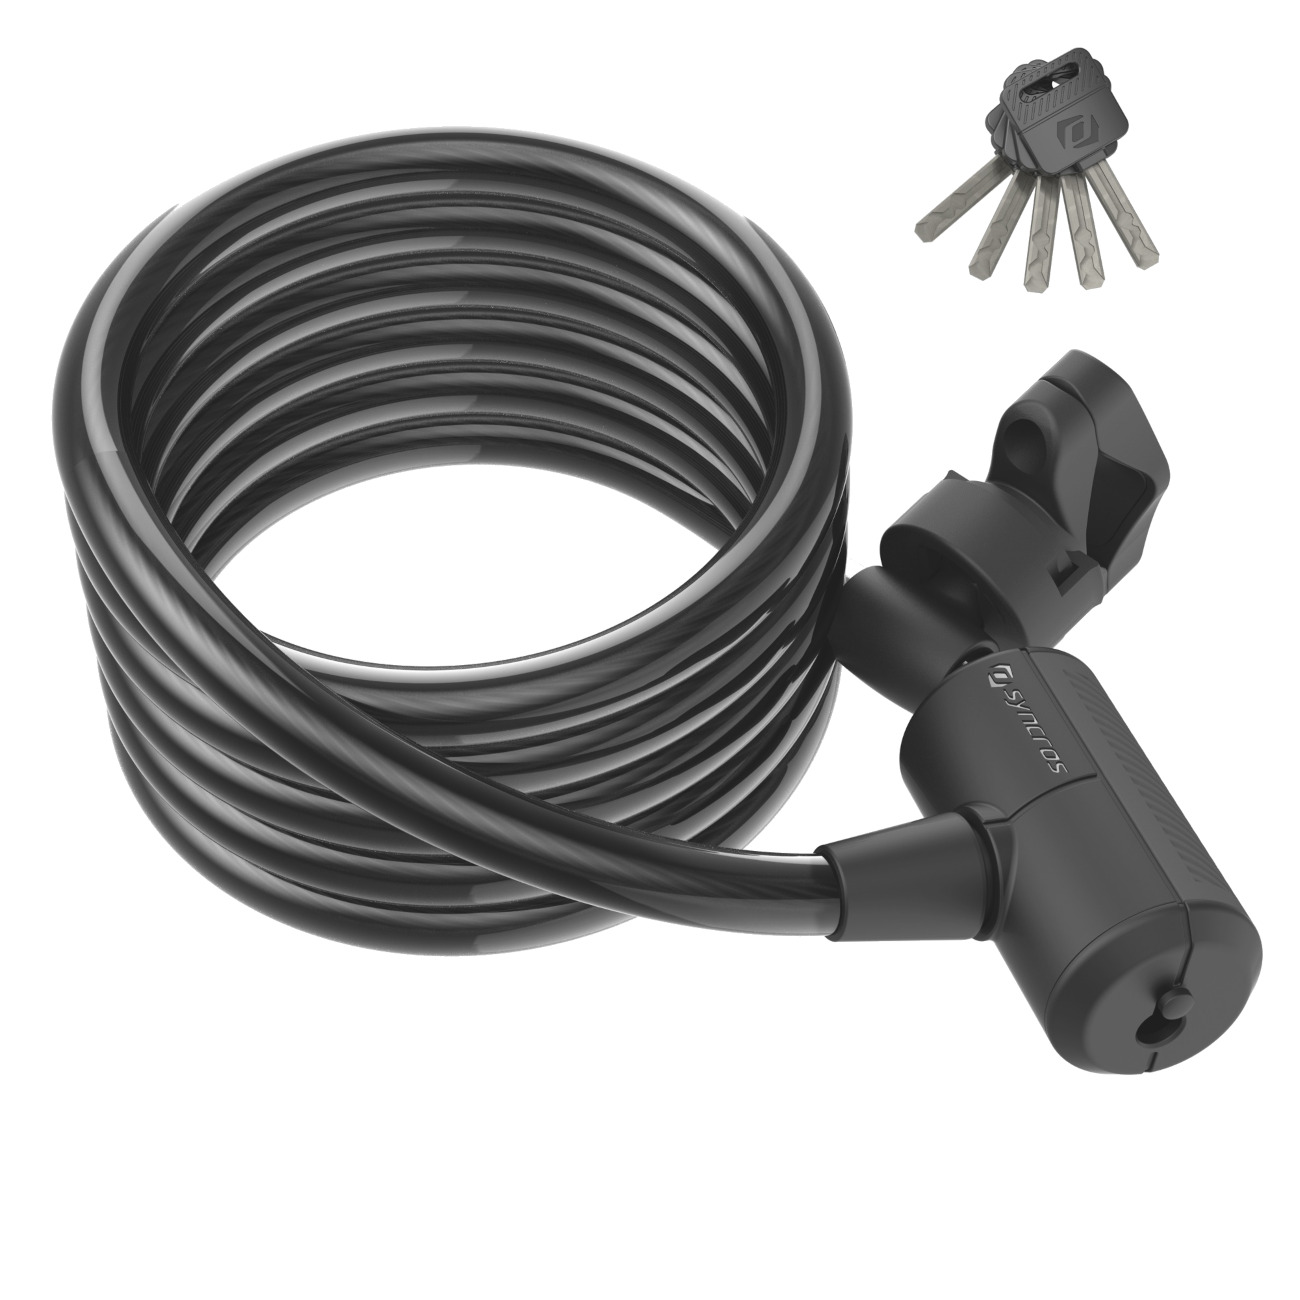 Productfoto van Syncros Masset Coil Cable Key Lock - black